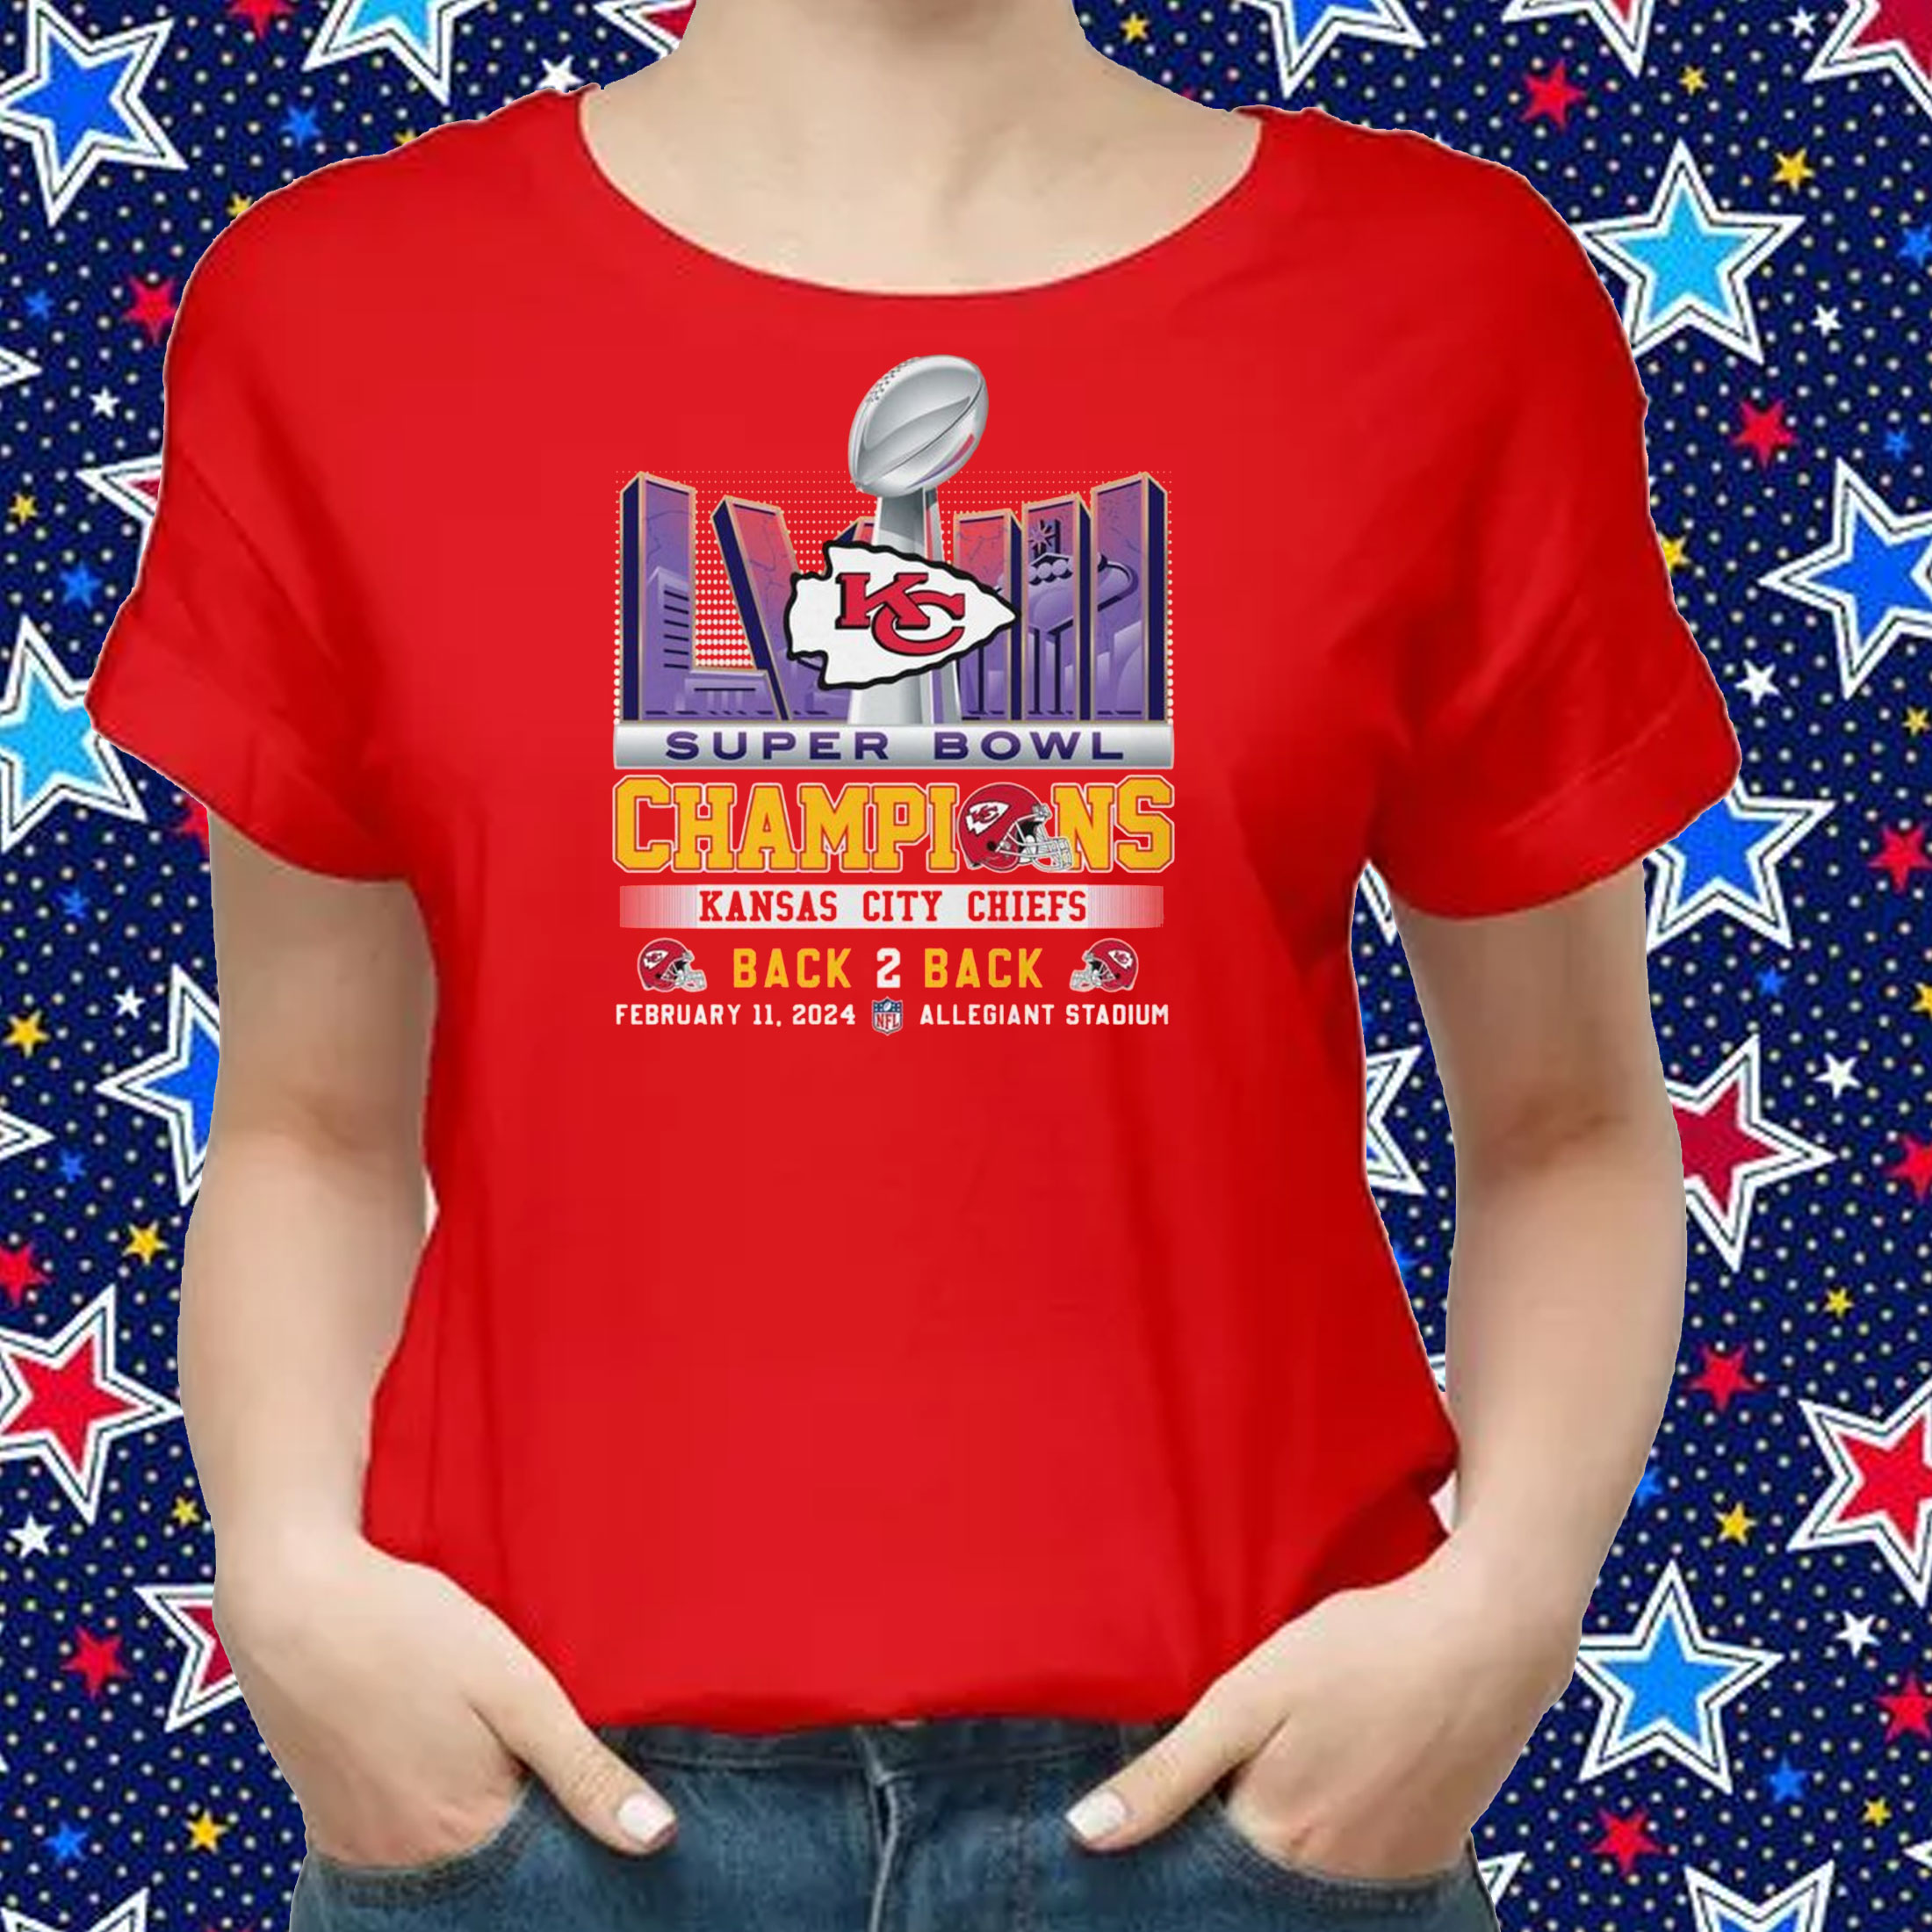 Super Bowl Lviii Champions Kansas City Chiefs Back 2 Back February 11 2024 Allegiant Stadium Shirts